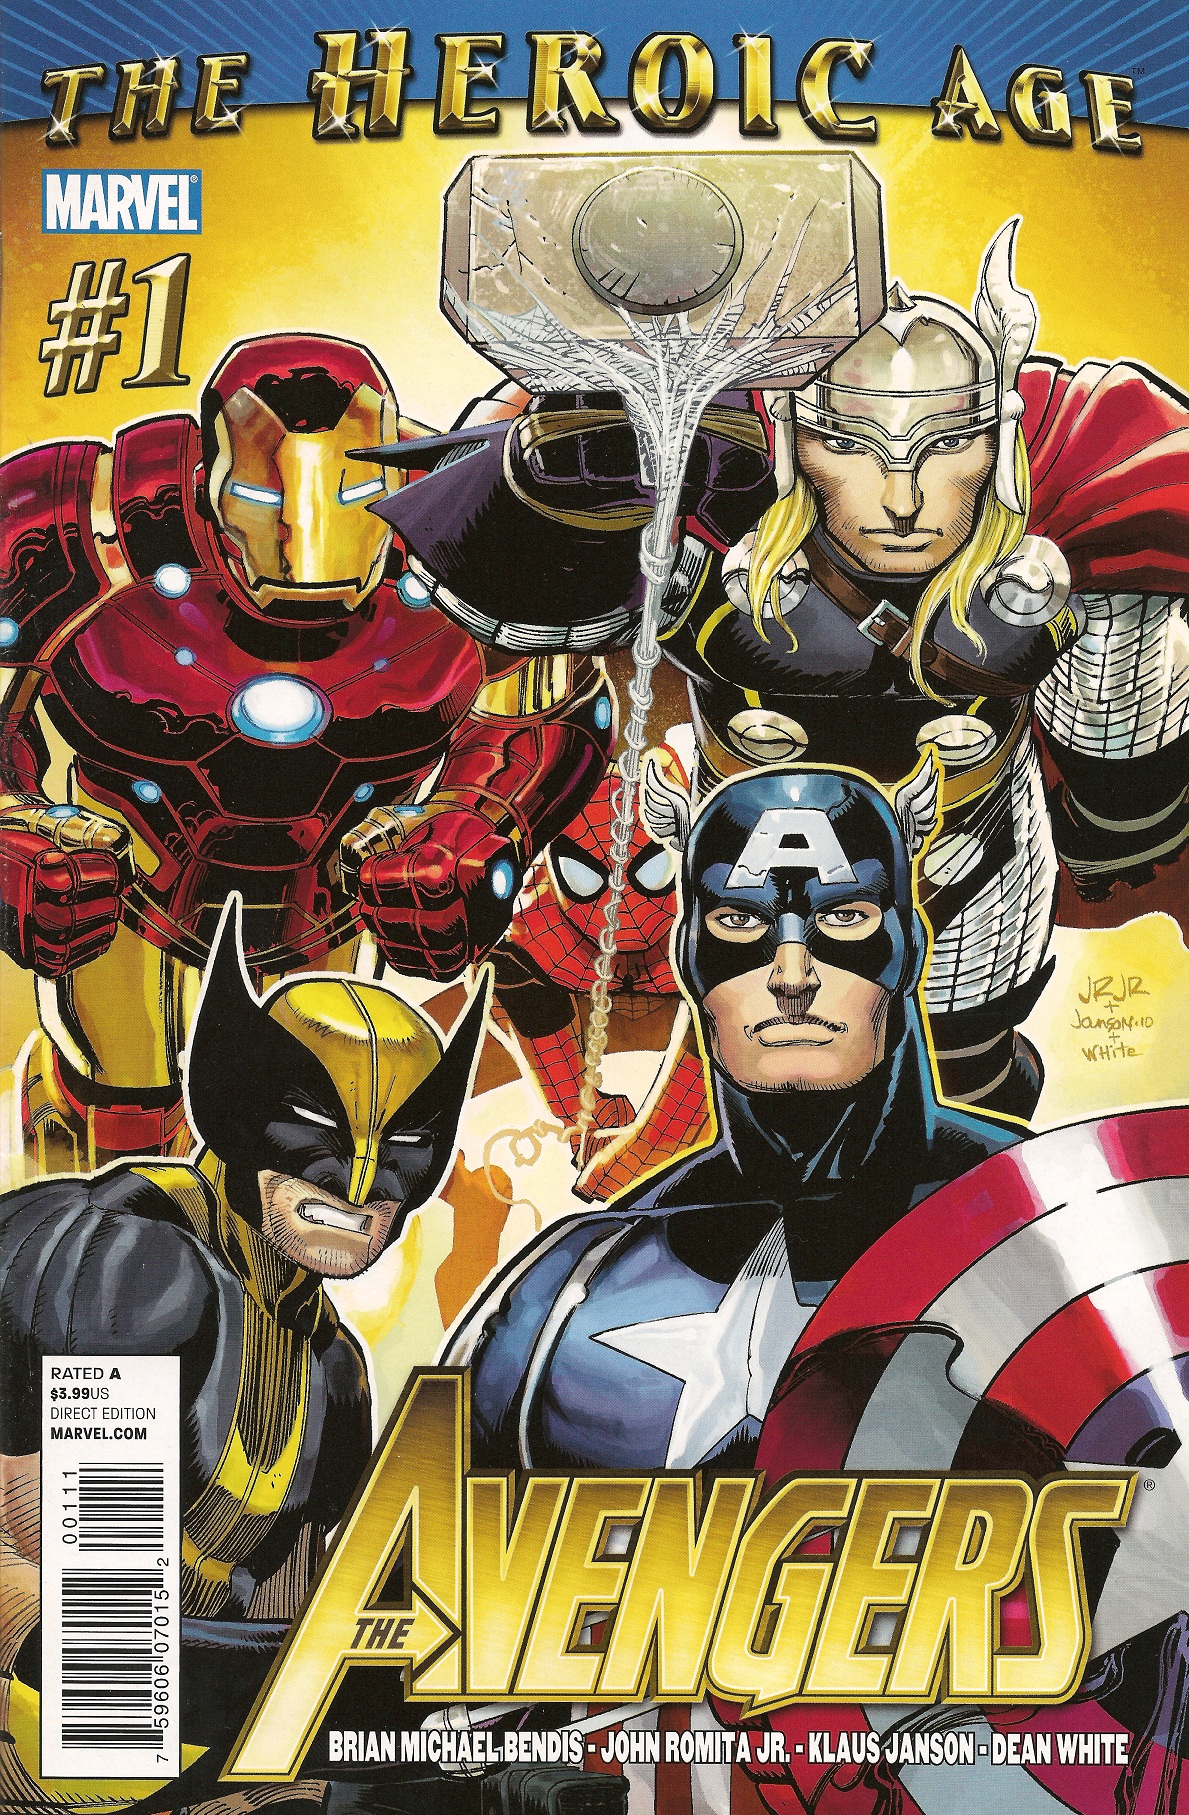 The Avengers Vol. 4 #1